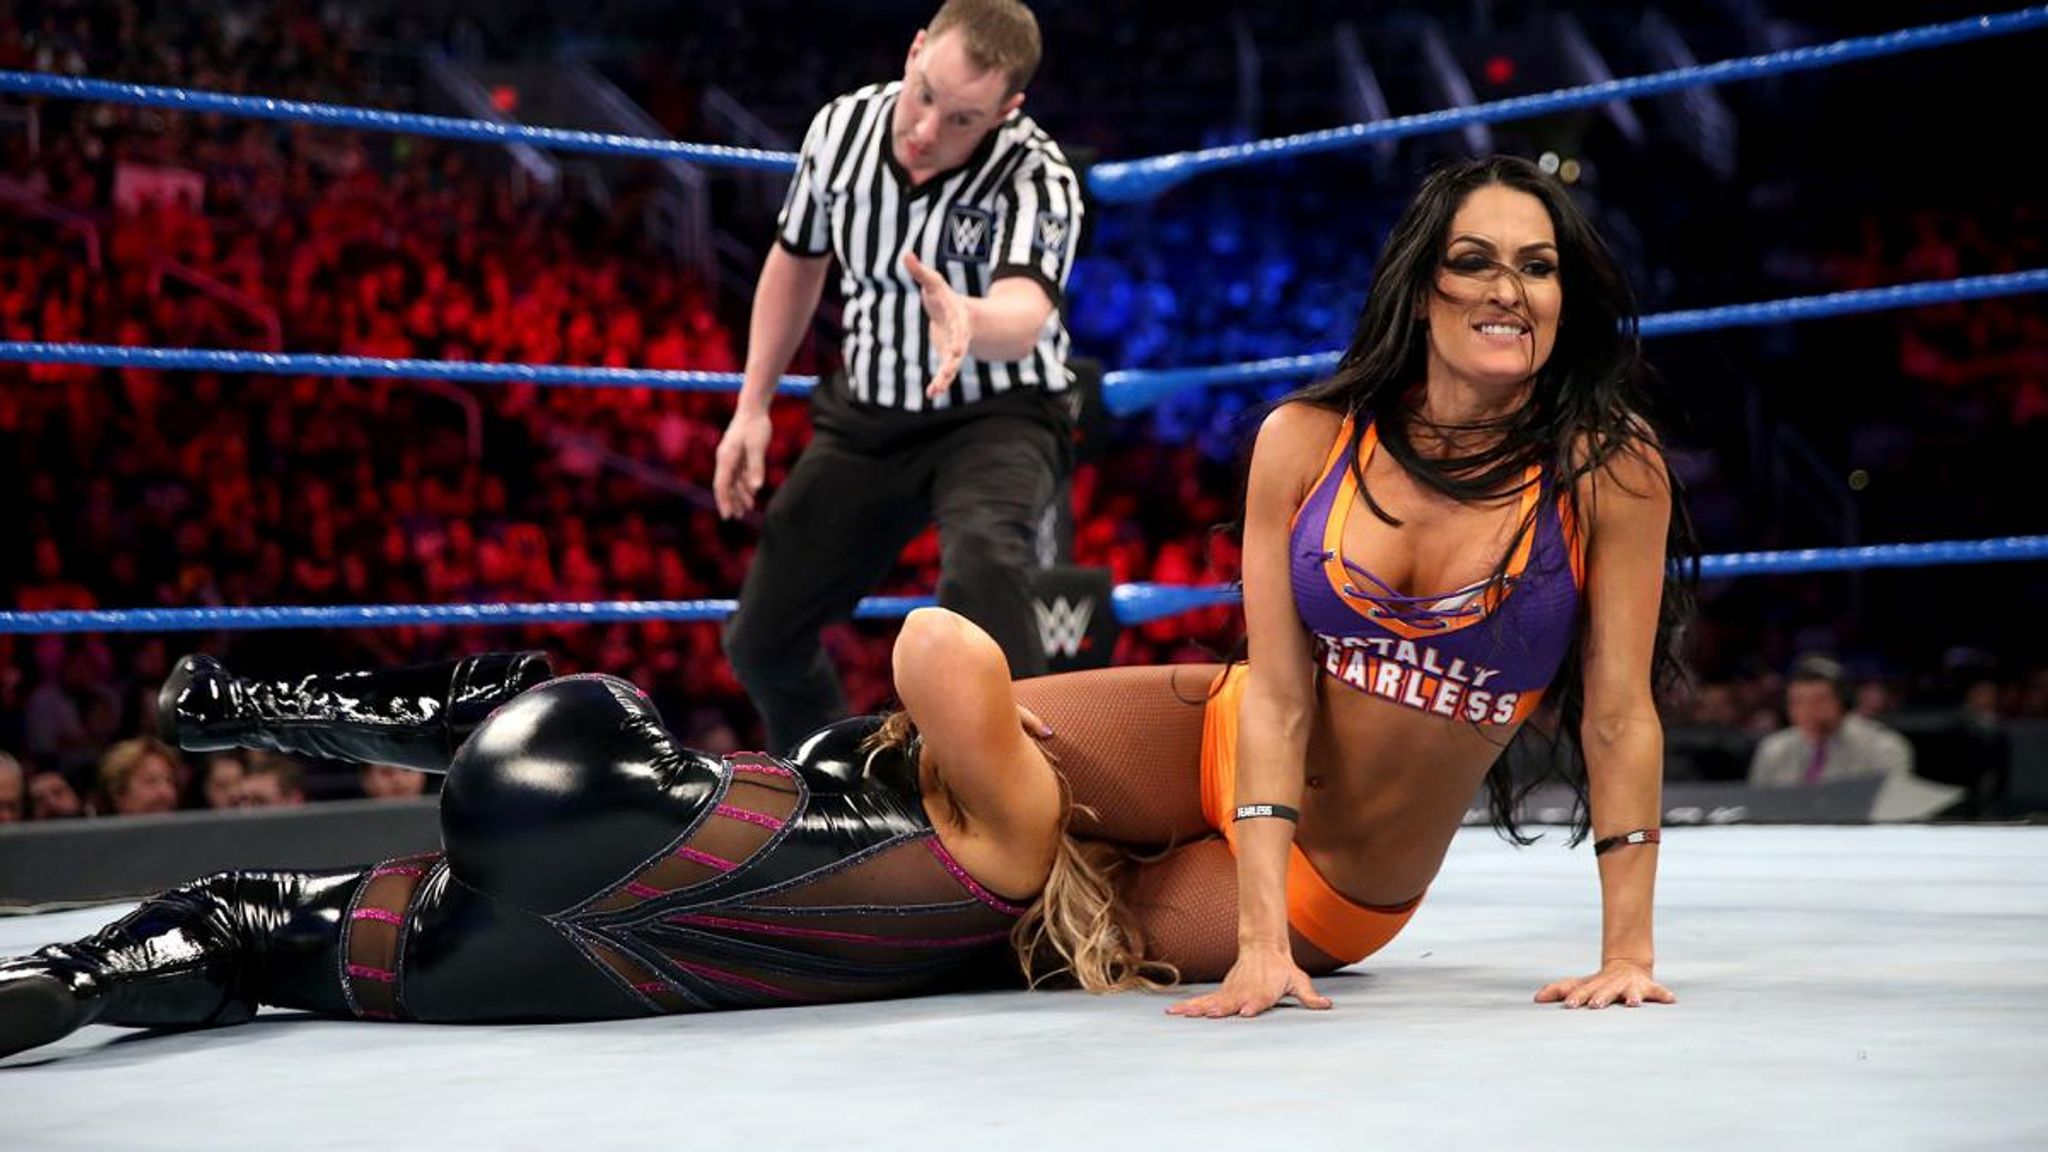 WWE - Nikki Bella is getting into FEARLESS shape heading